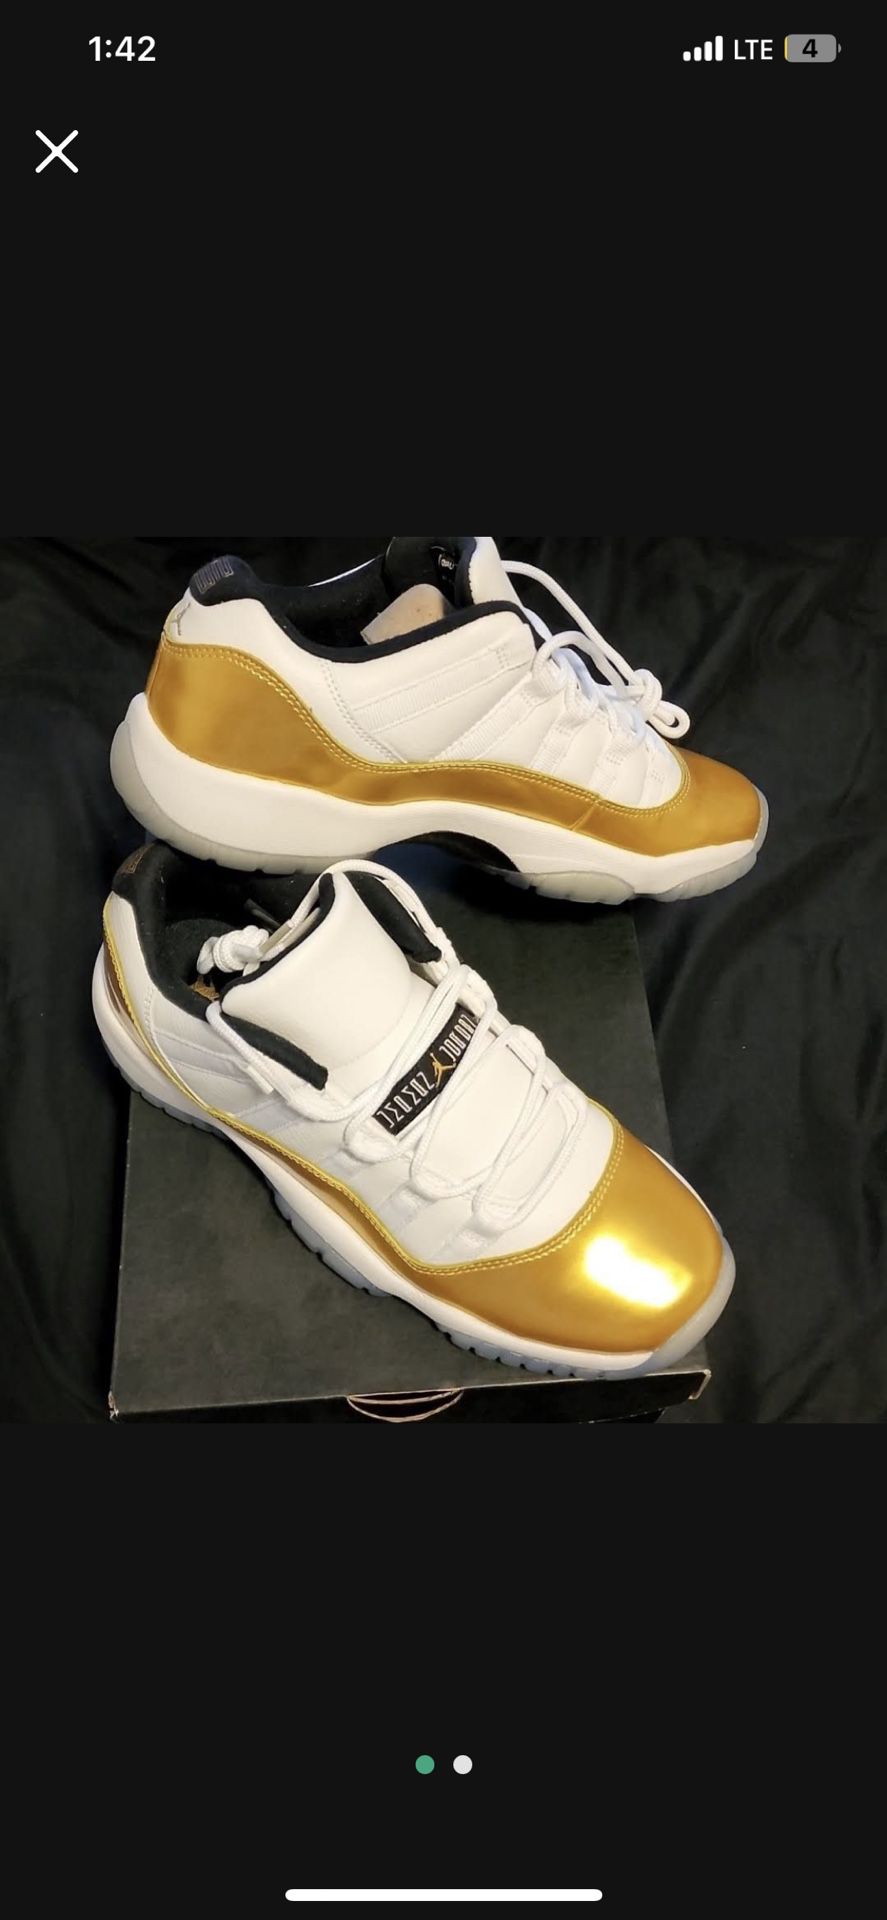 Gold Jordan 11s